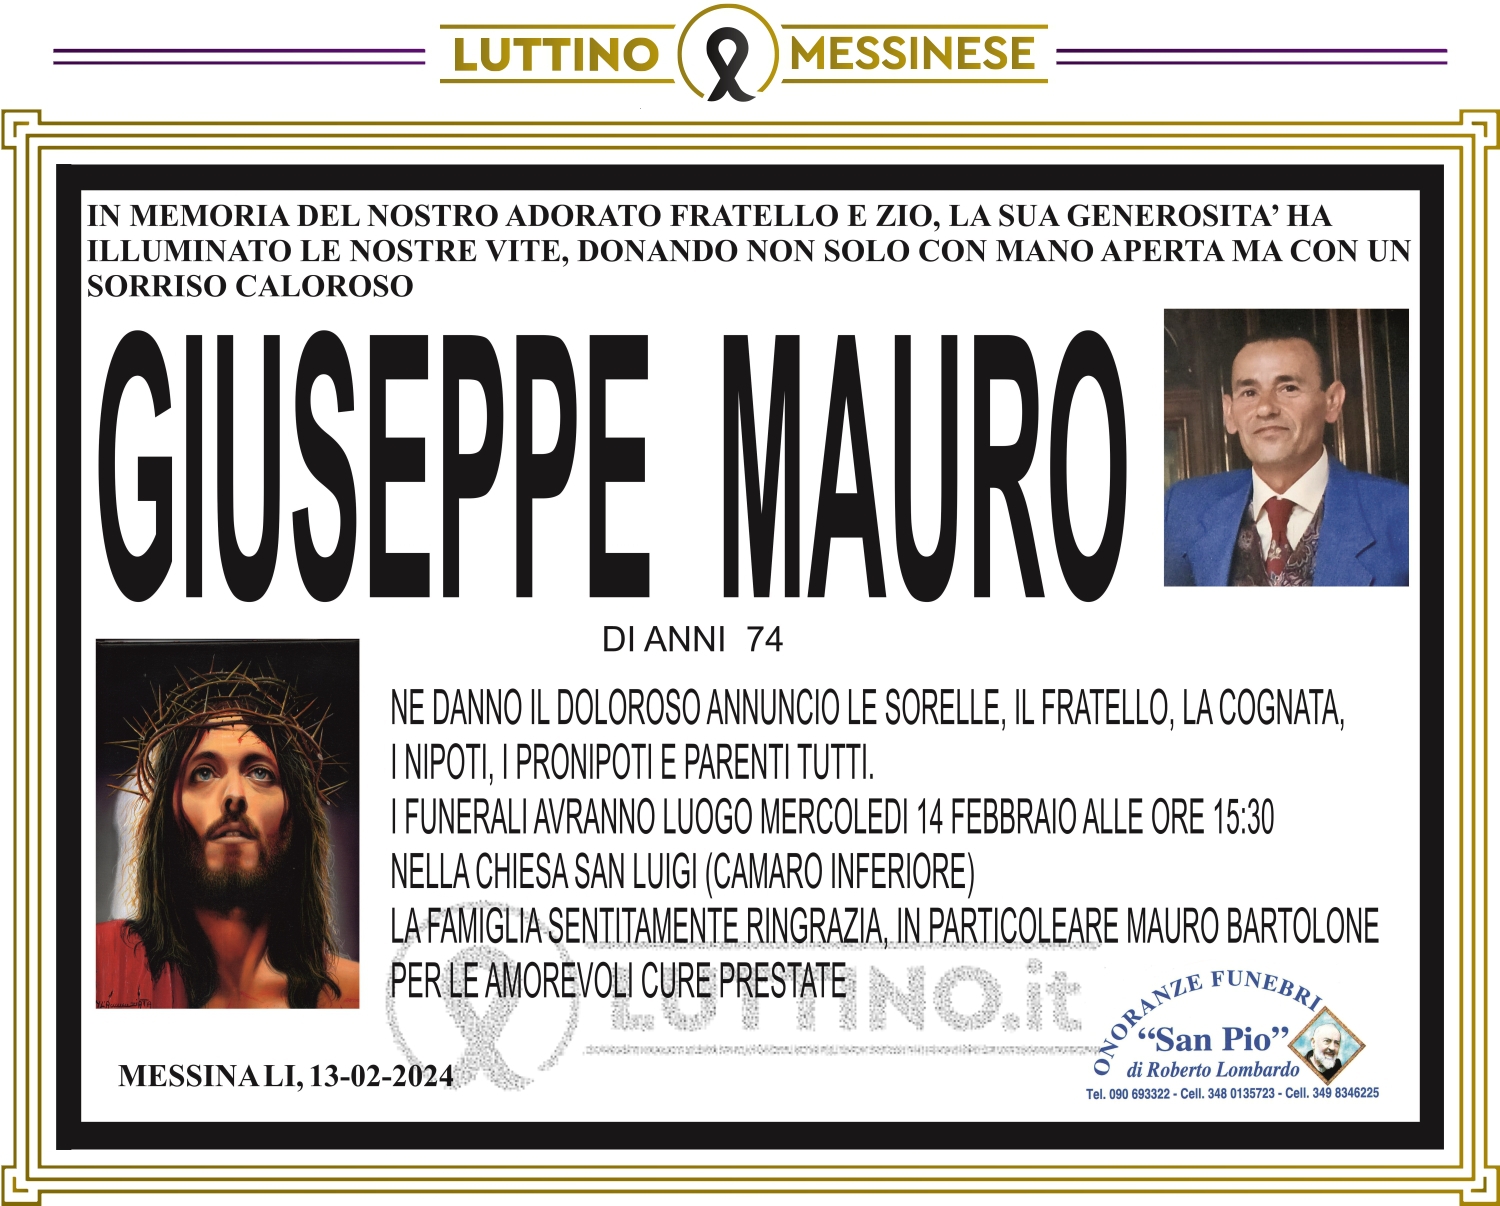 Giuseppe Mauro